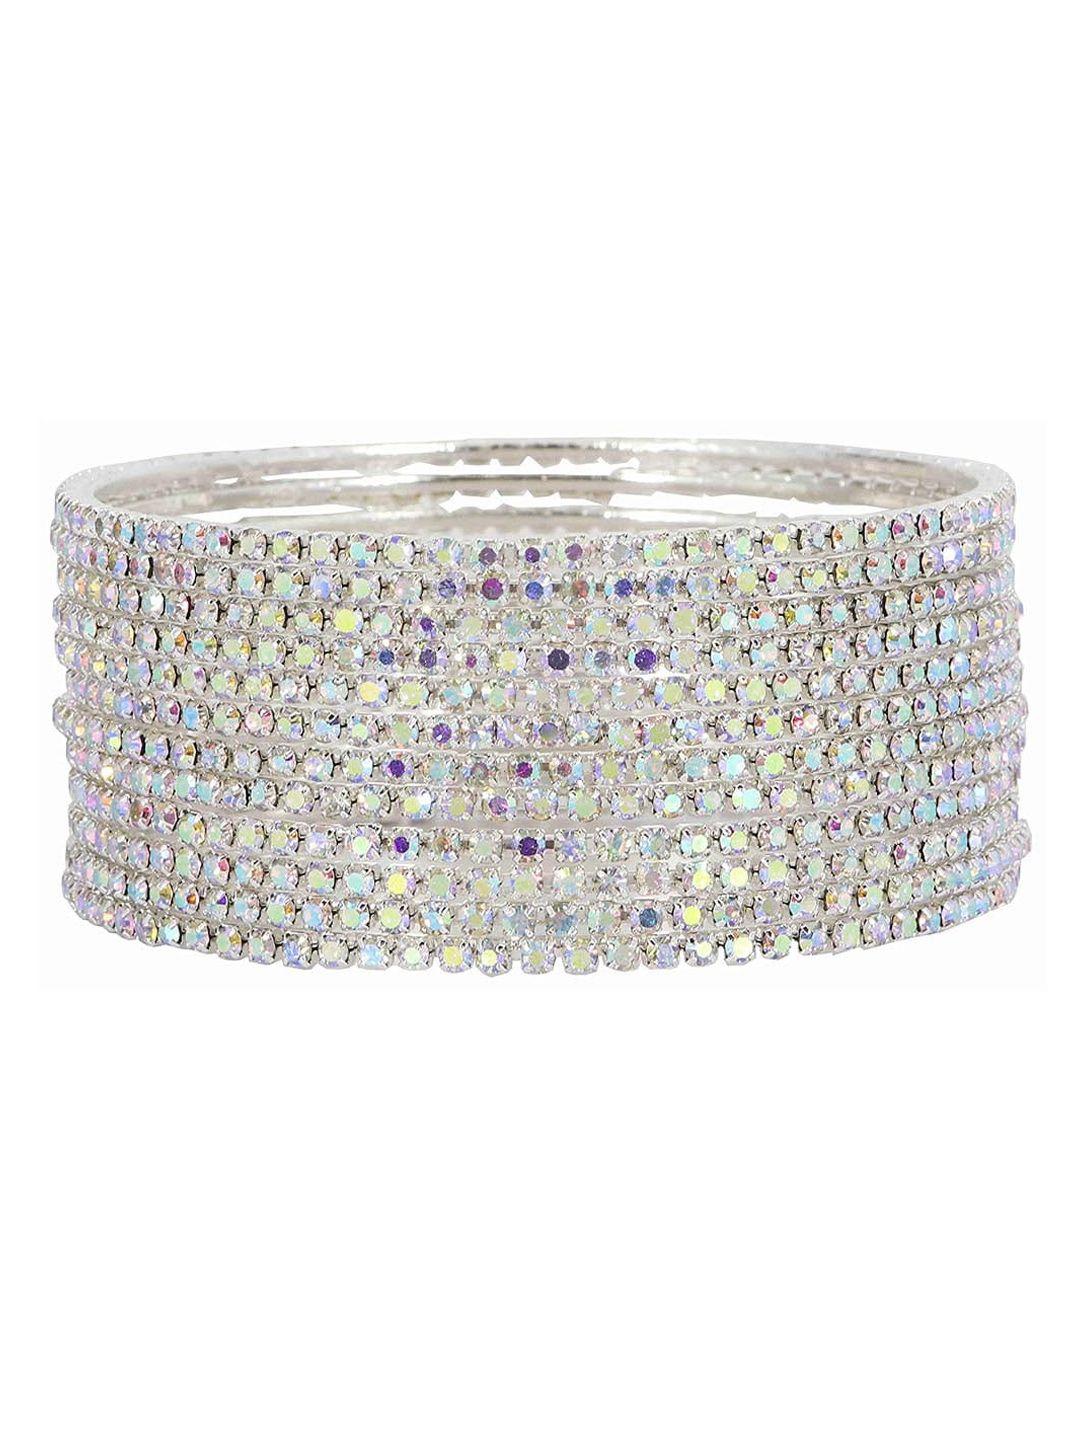 nmii classic fashion set of 12 crystal-studded antique bangles